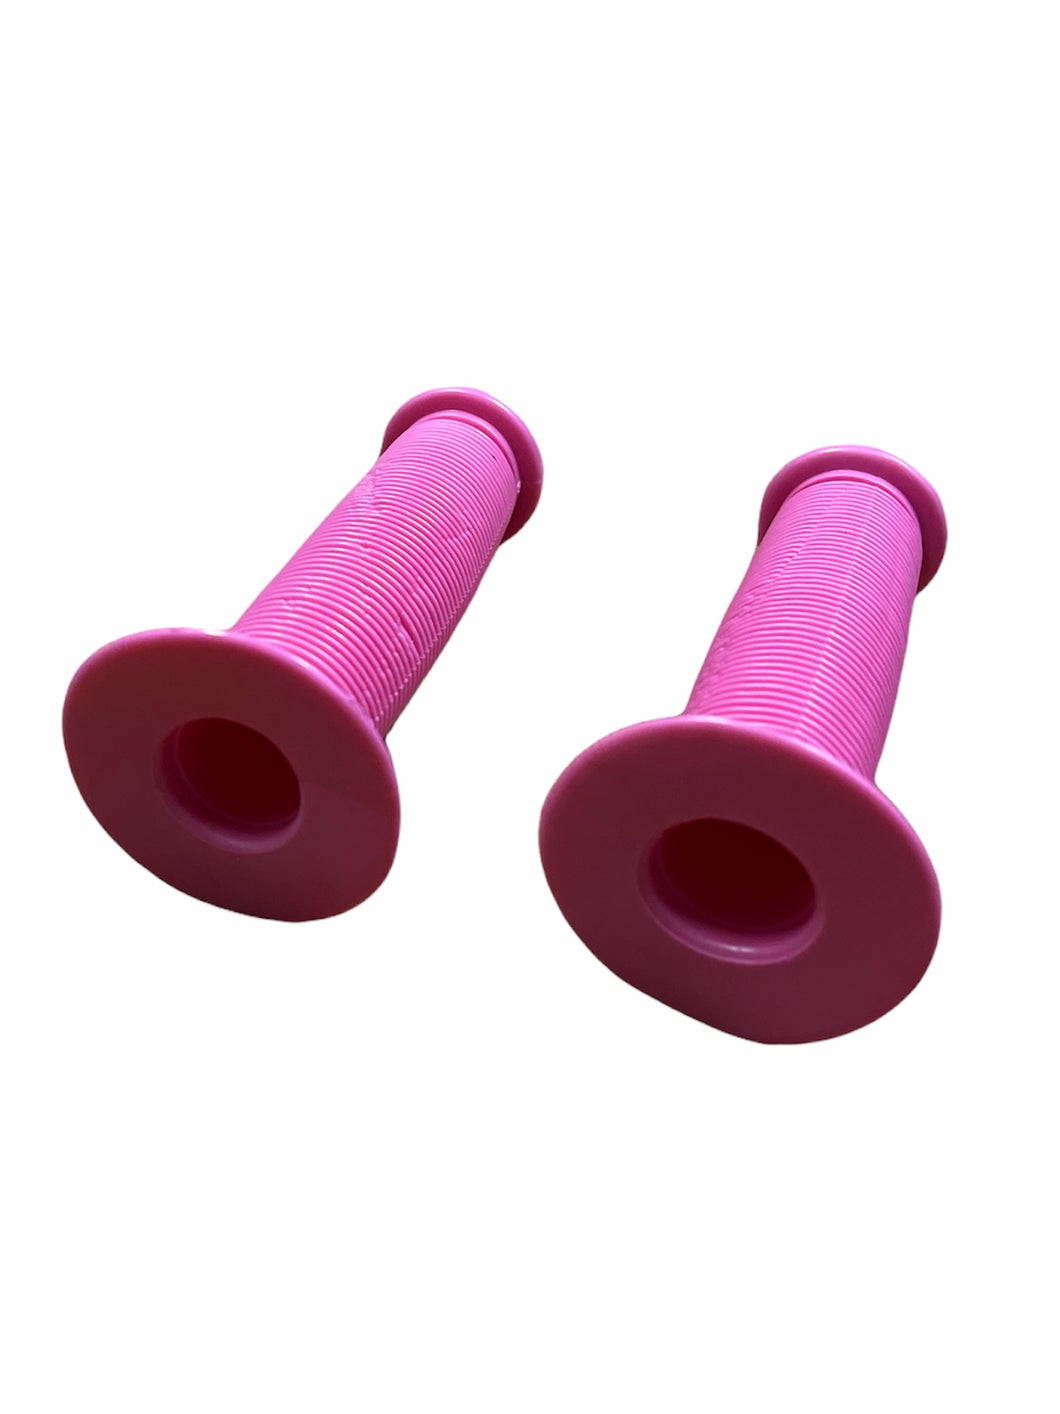 Mushroom PVC Handlebar Grips Pink